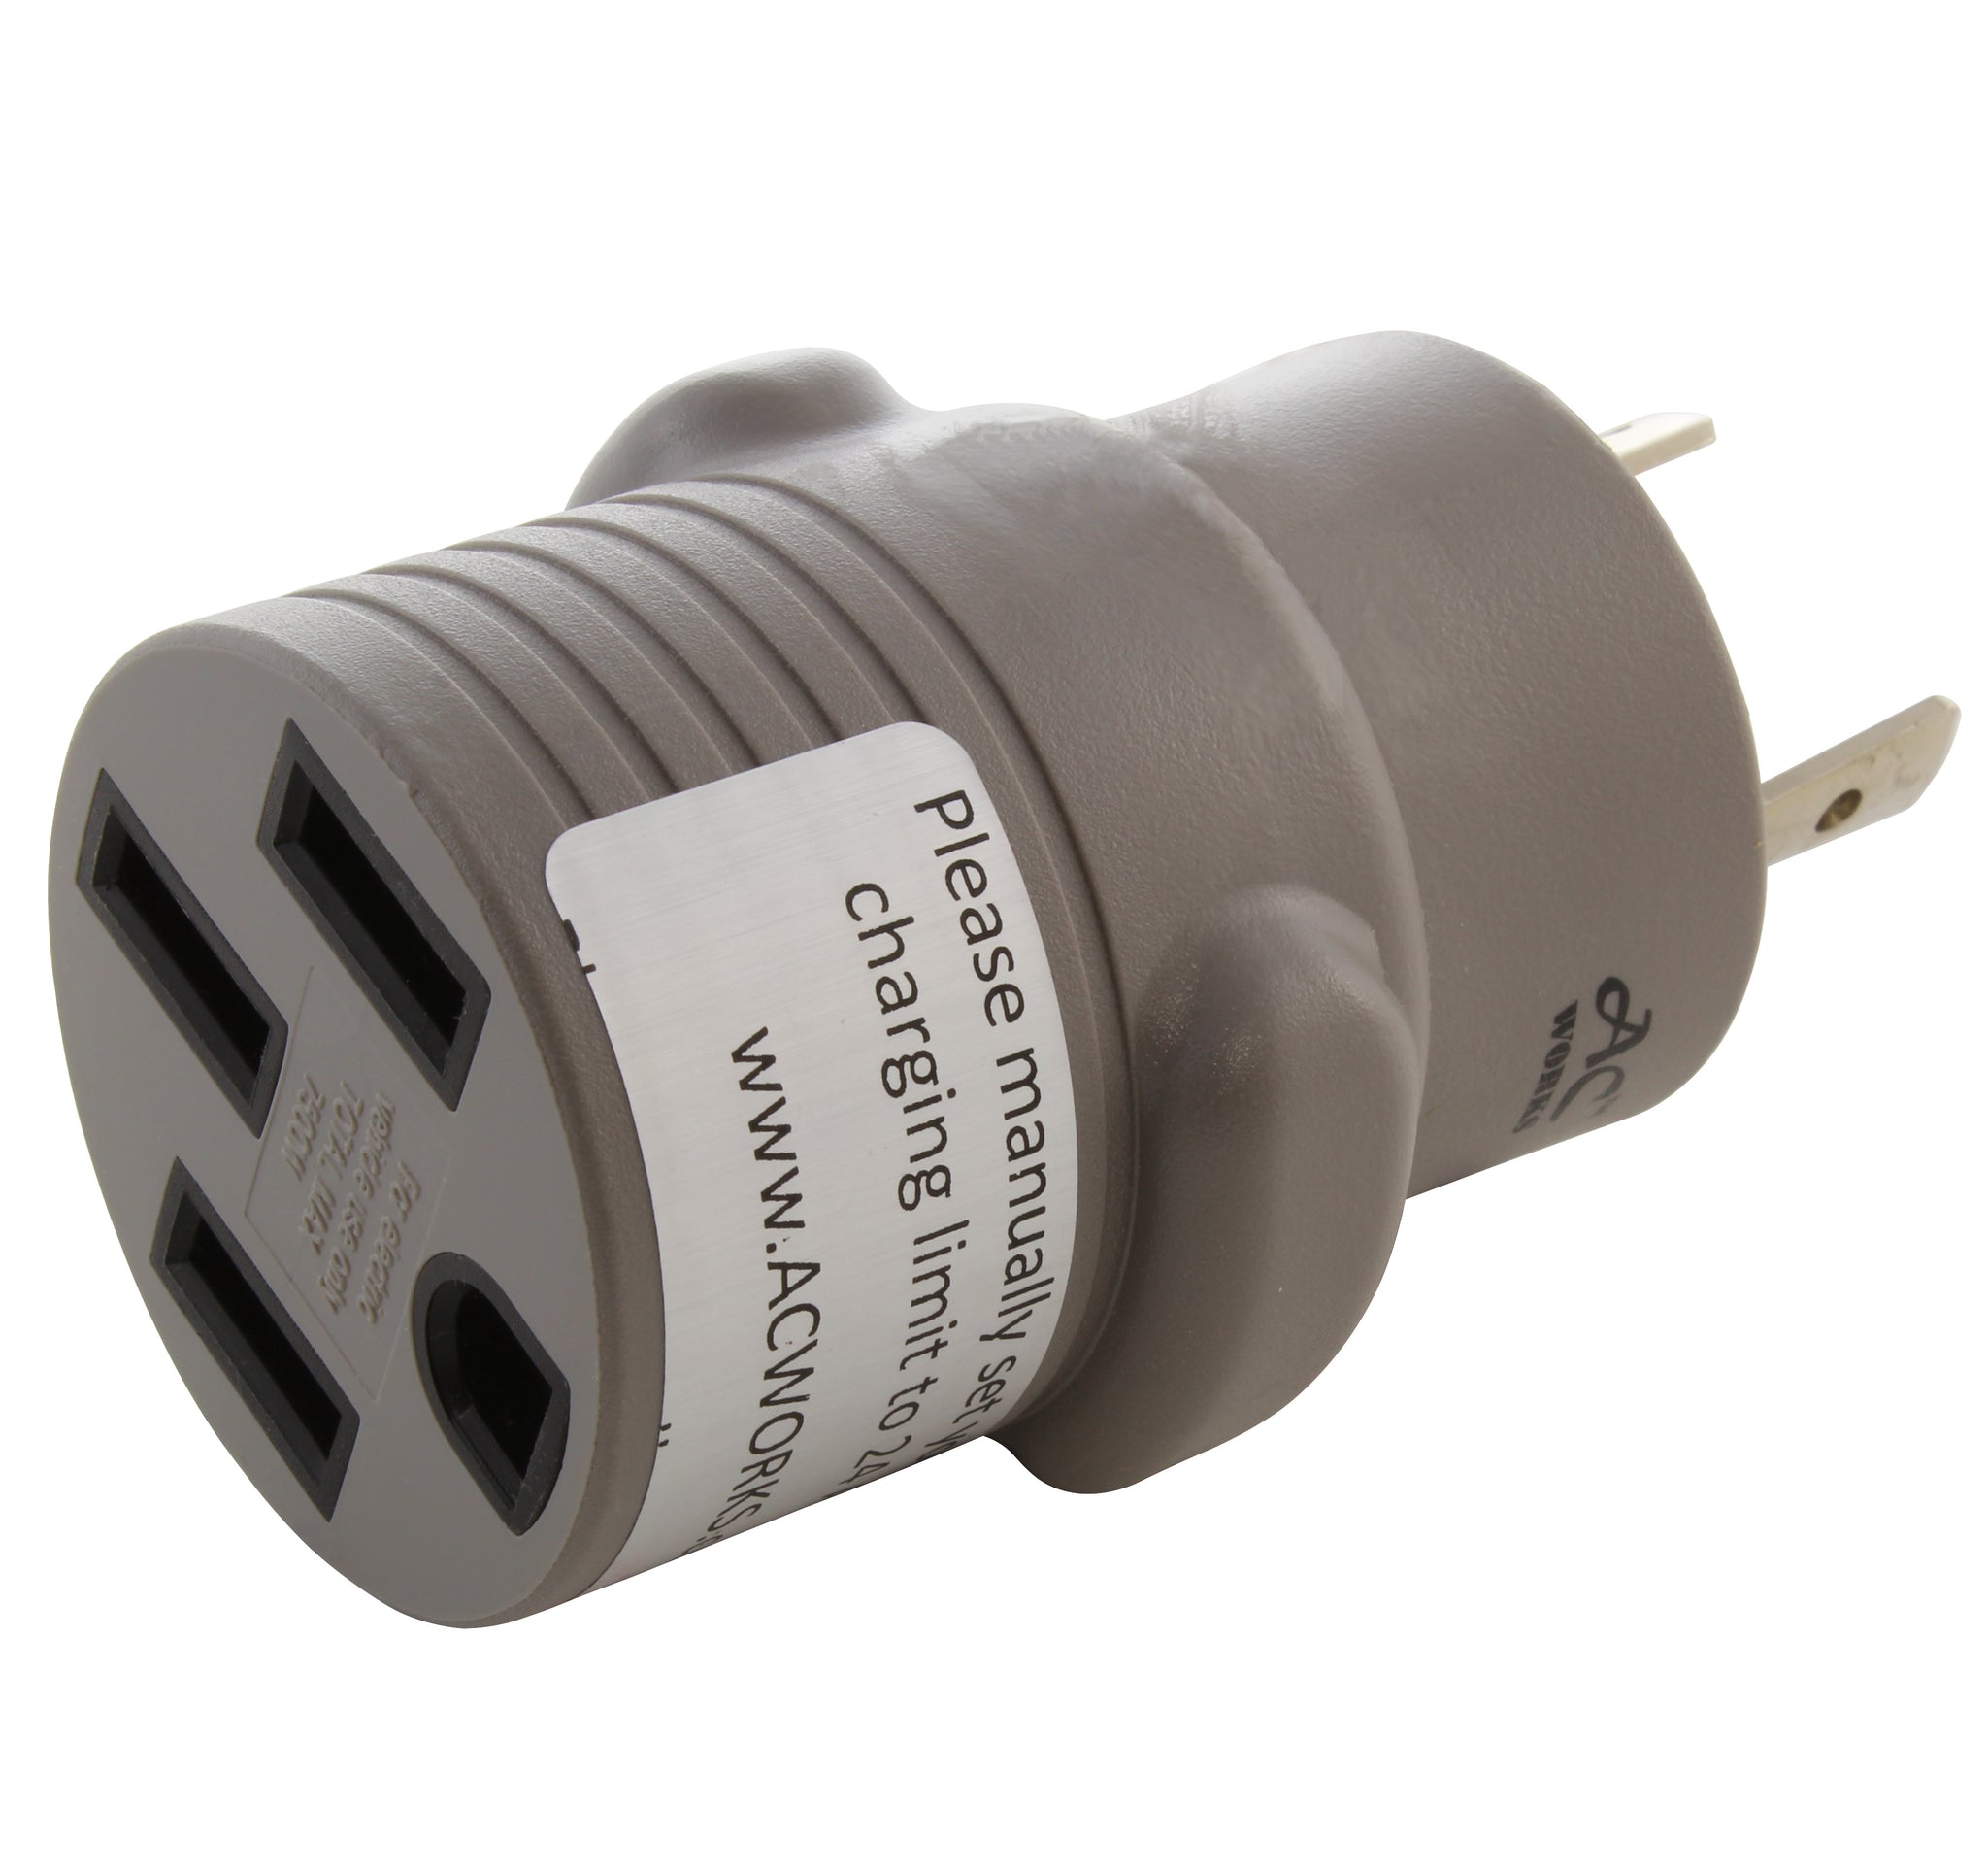 AC WORKS® EV Adapter NEMA L6-30P 30A 250V Plug to Tesla Charging